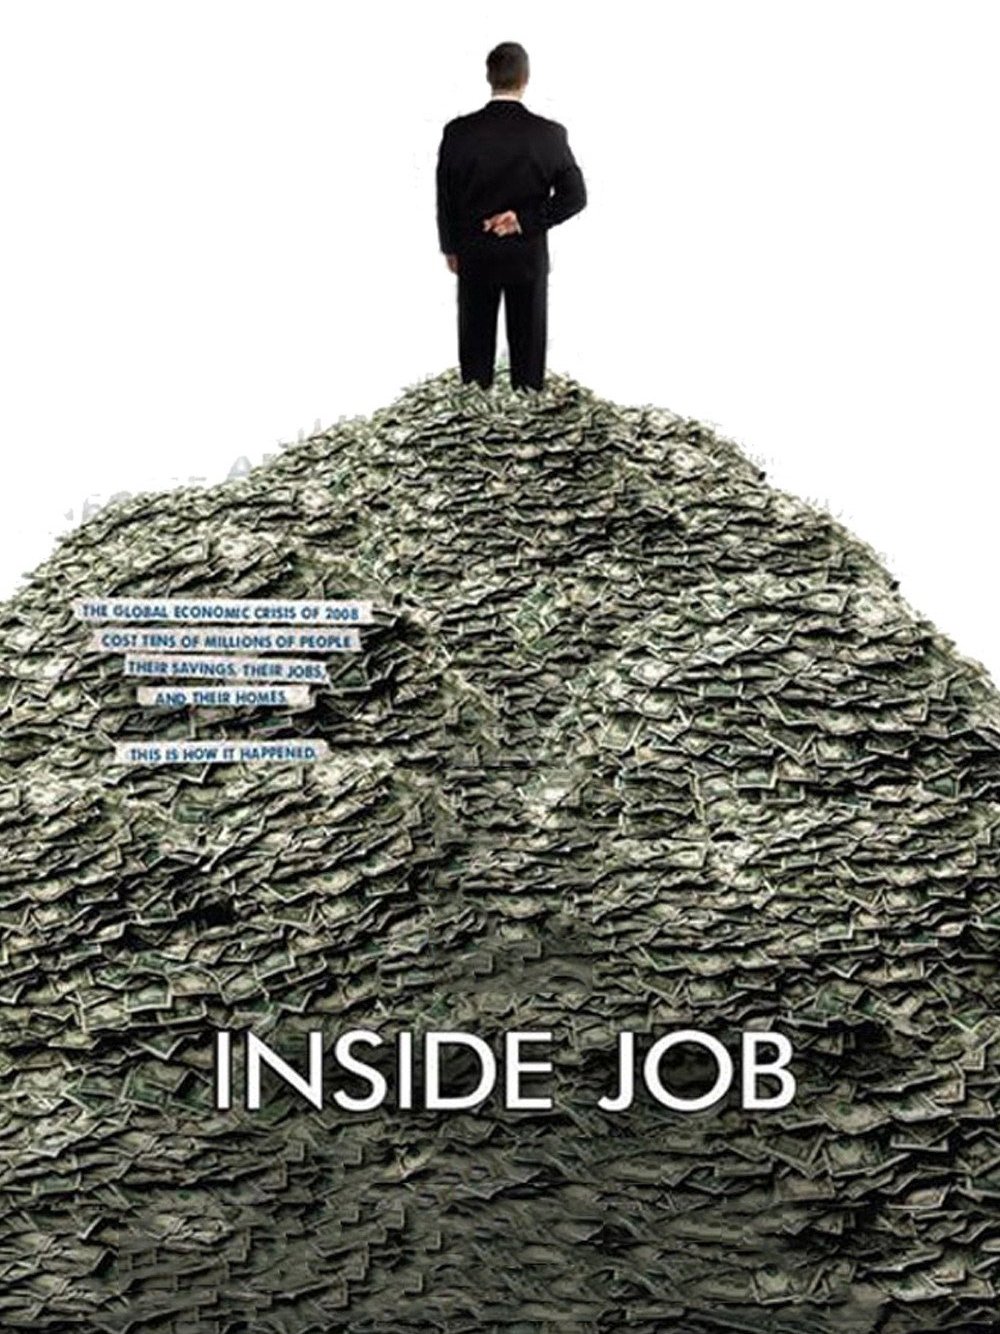 Inside Job Google image from http://randomindependent.com/wp-content/uploads/2011/12/inside-job-original.jpg